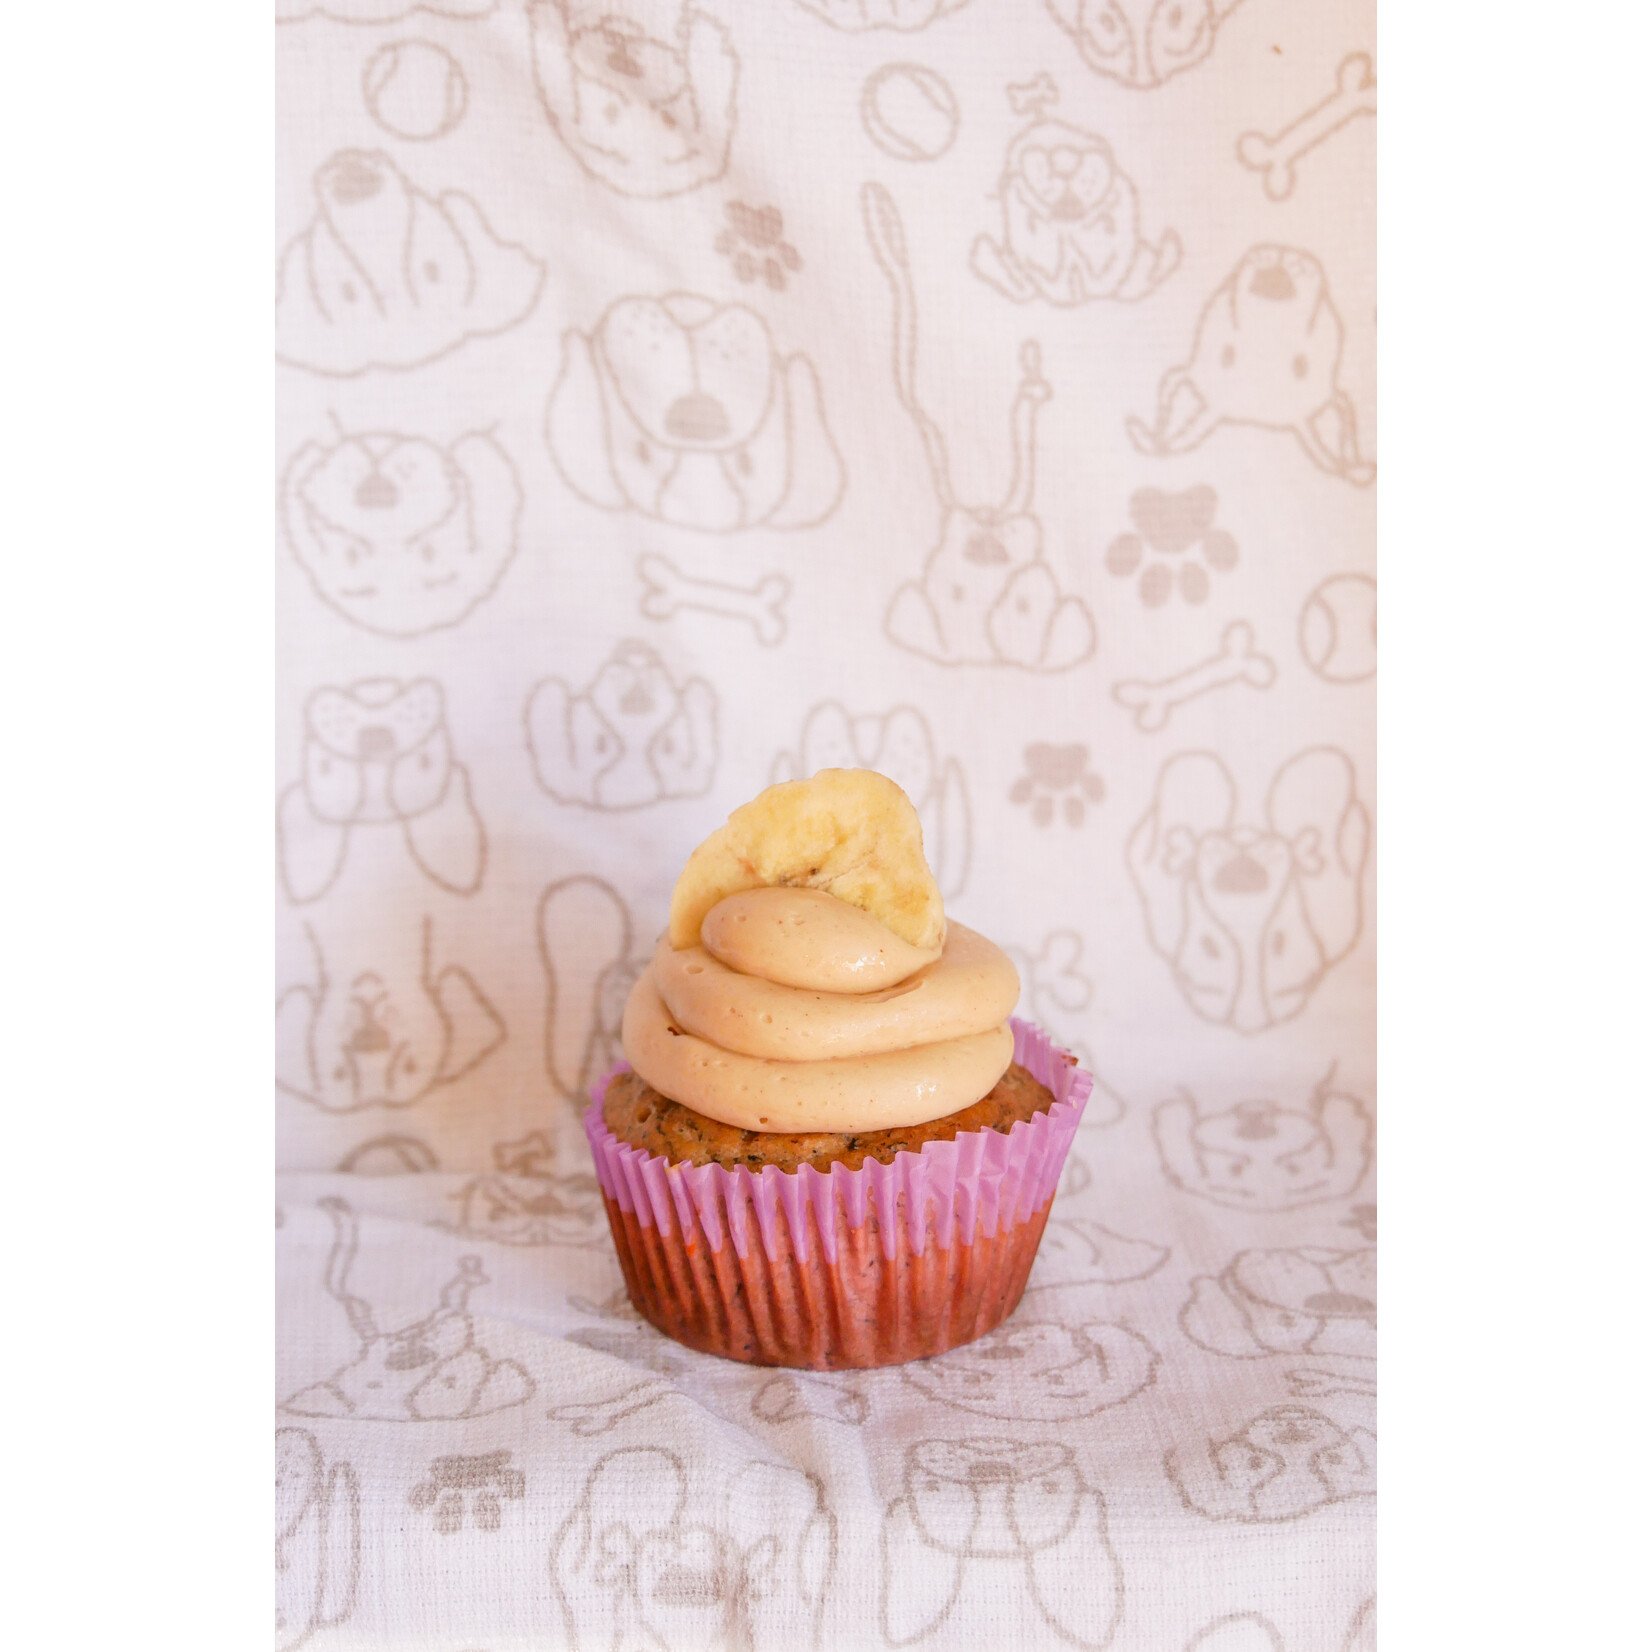 LDFC Bakery LDFC Bakery Cupcake - Peanut Butter Banana